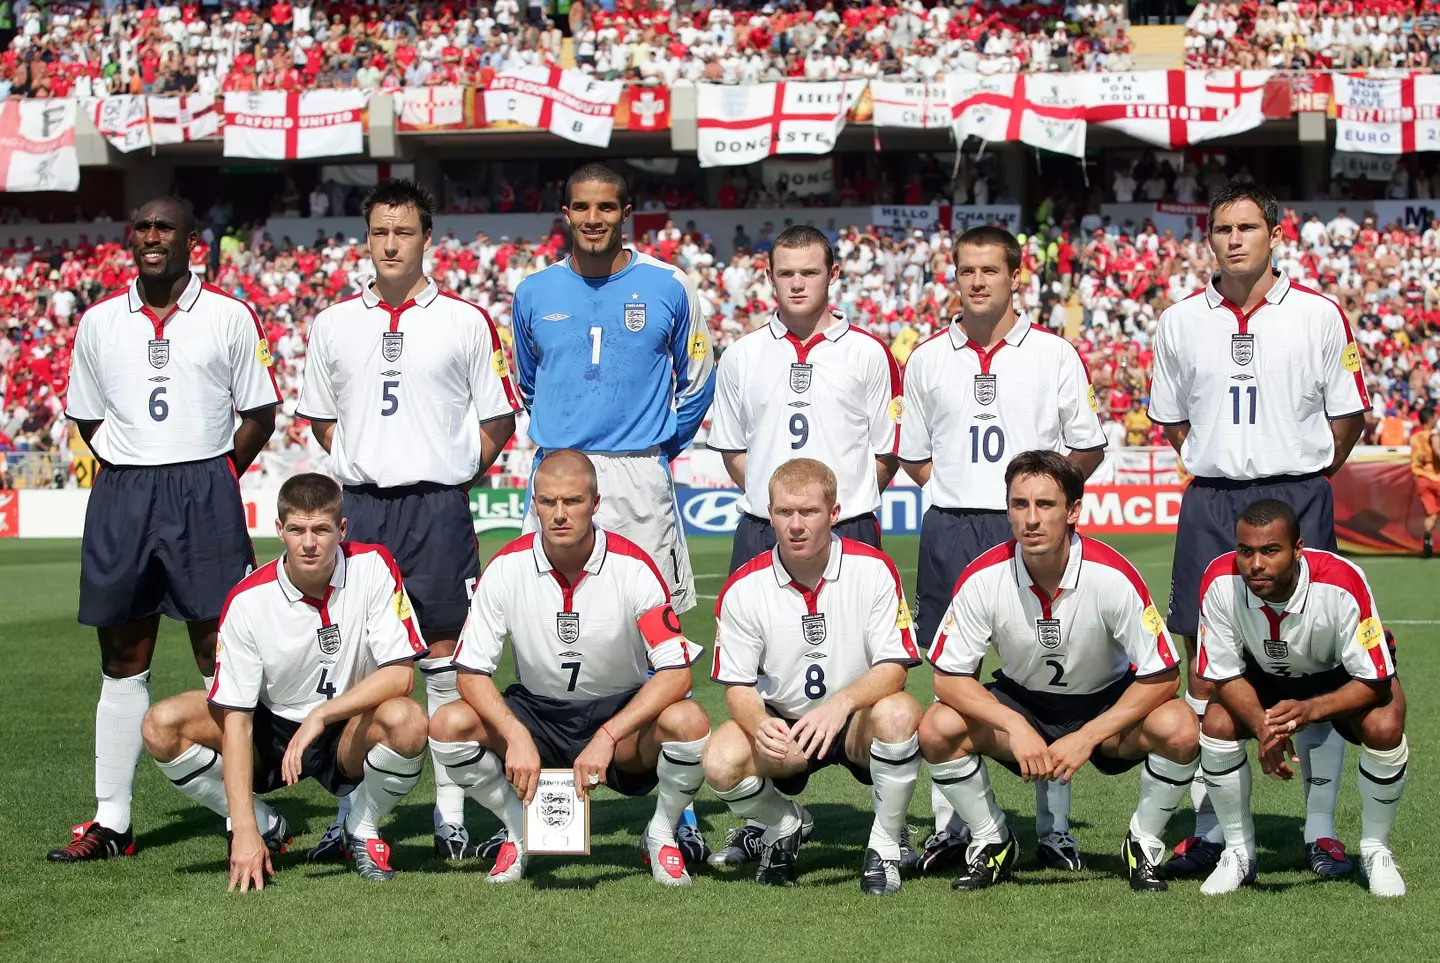 England's 'Golden Generation' lining up at Euro 2004. (Image